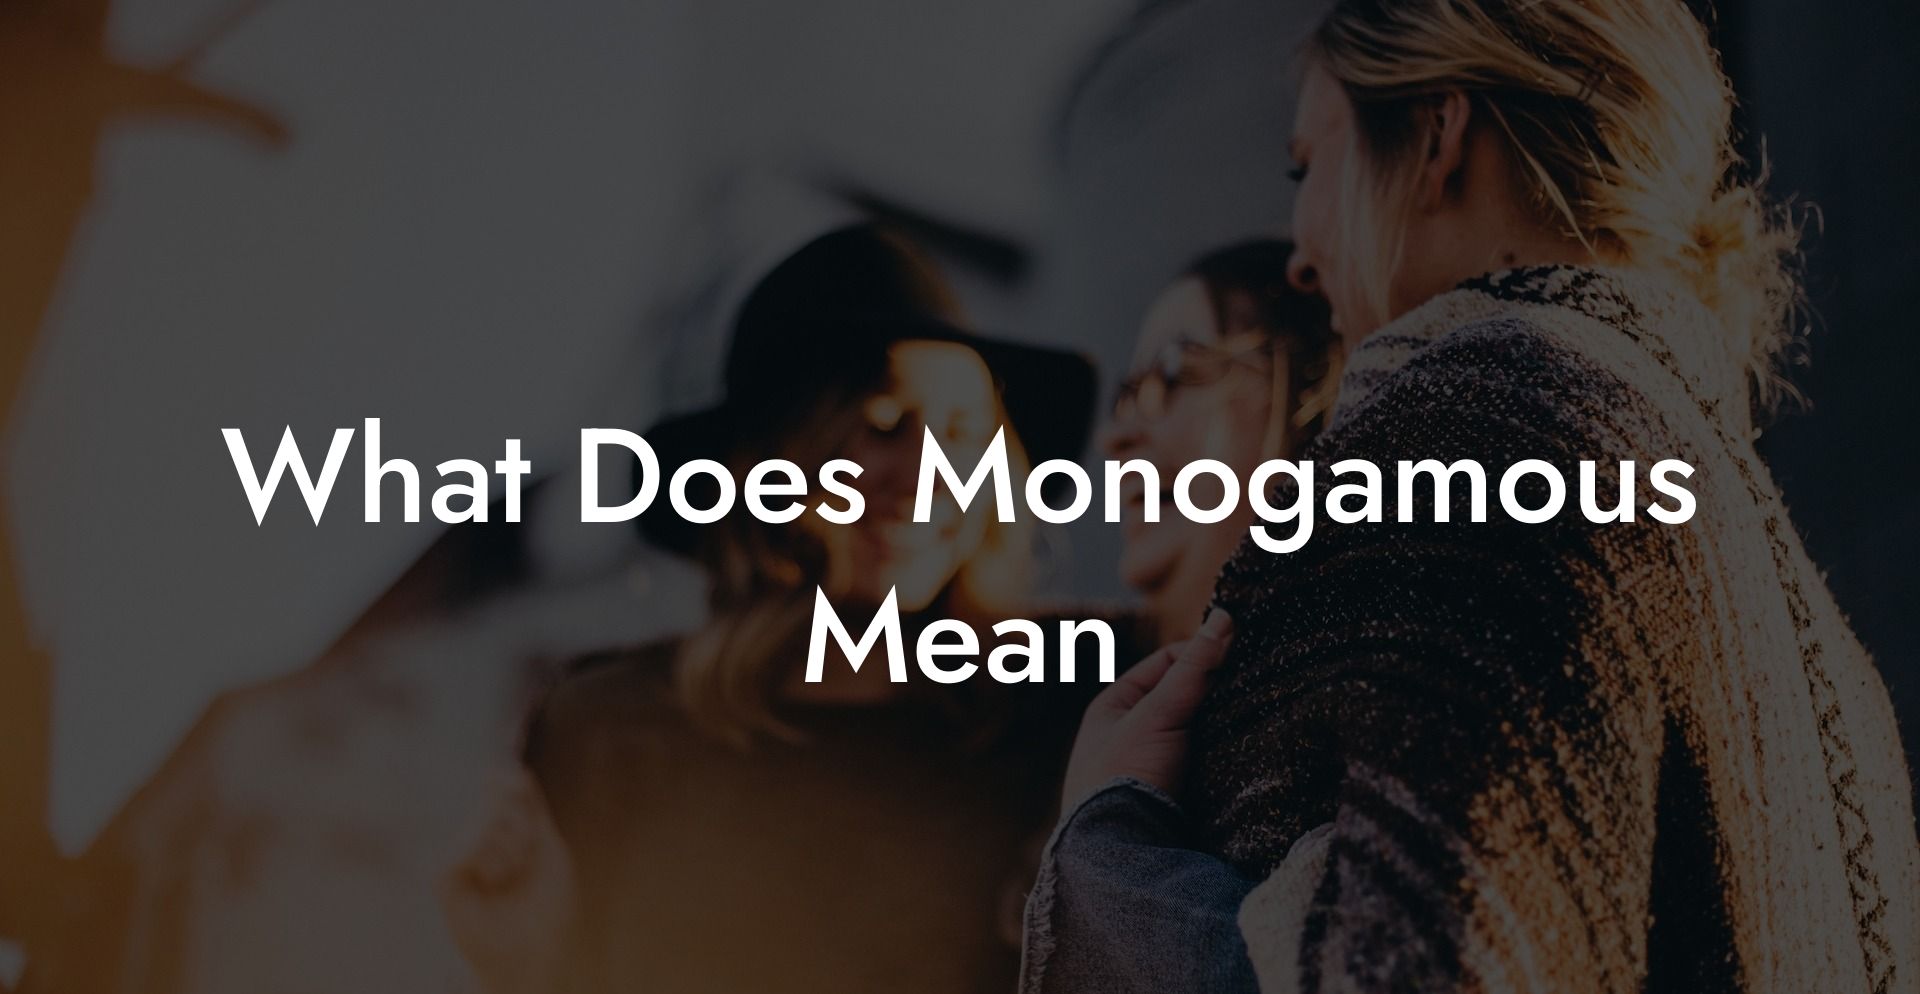 What Does Monogamous Mean